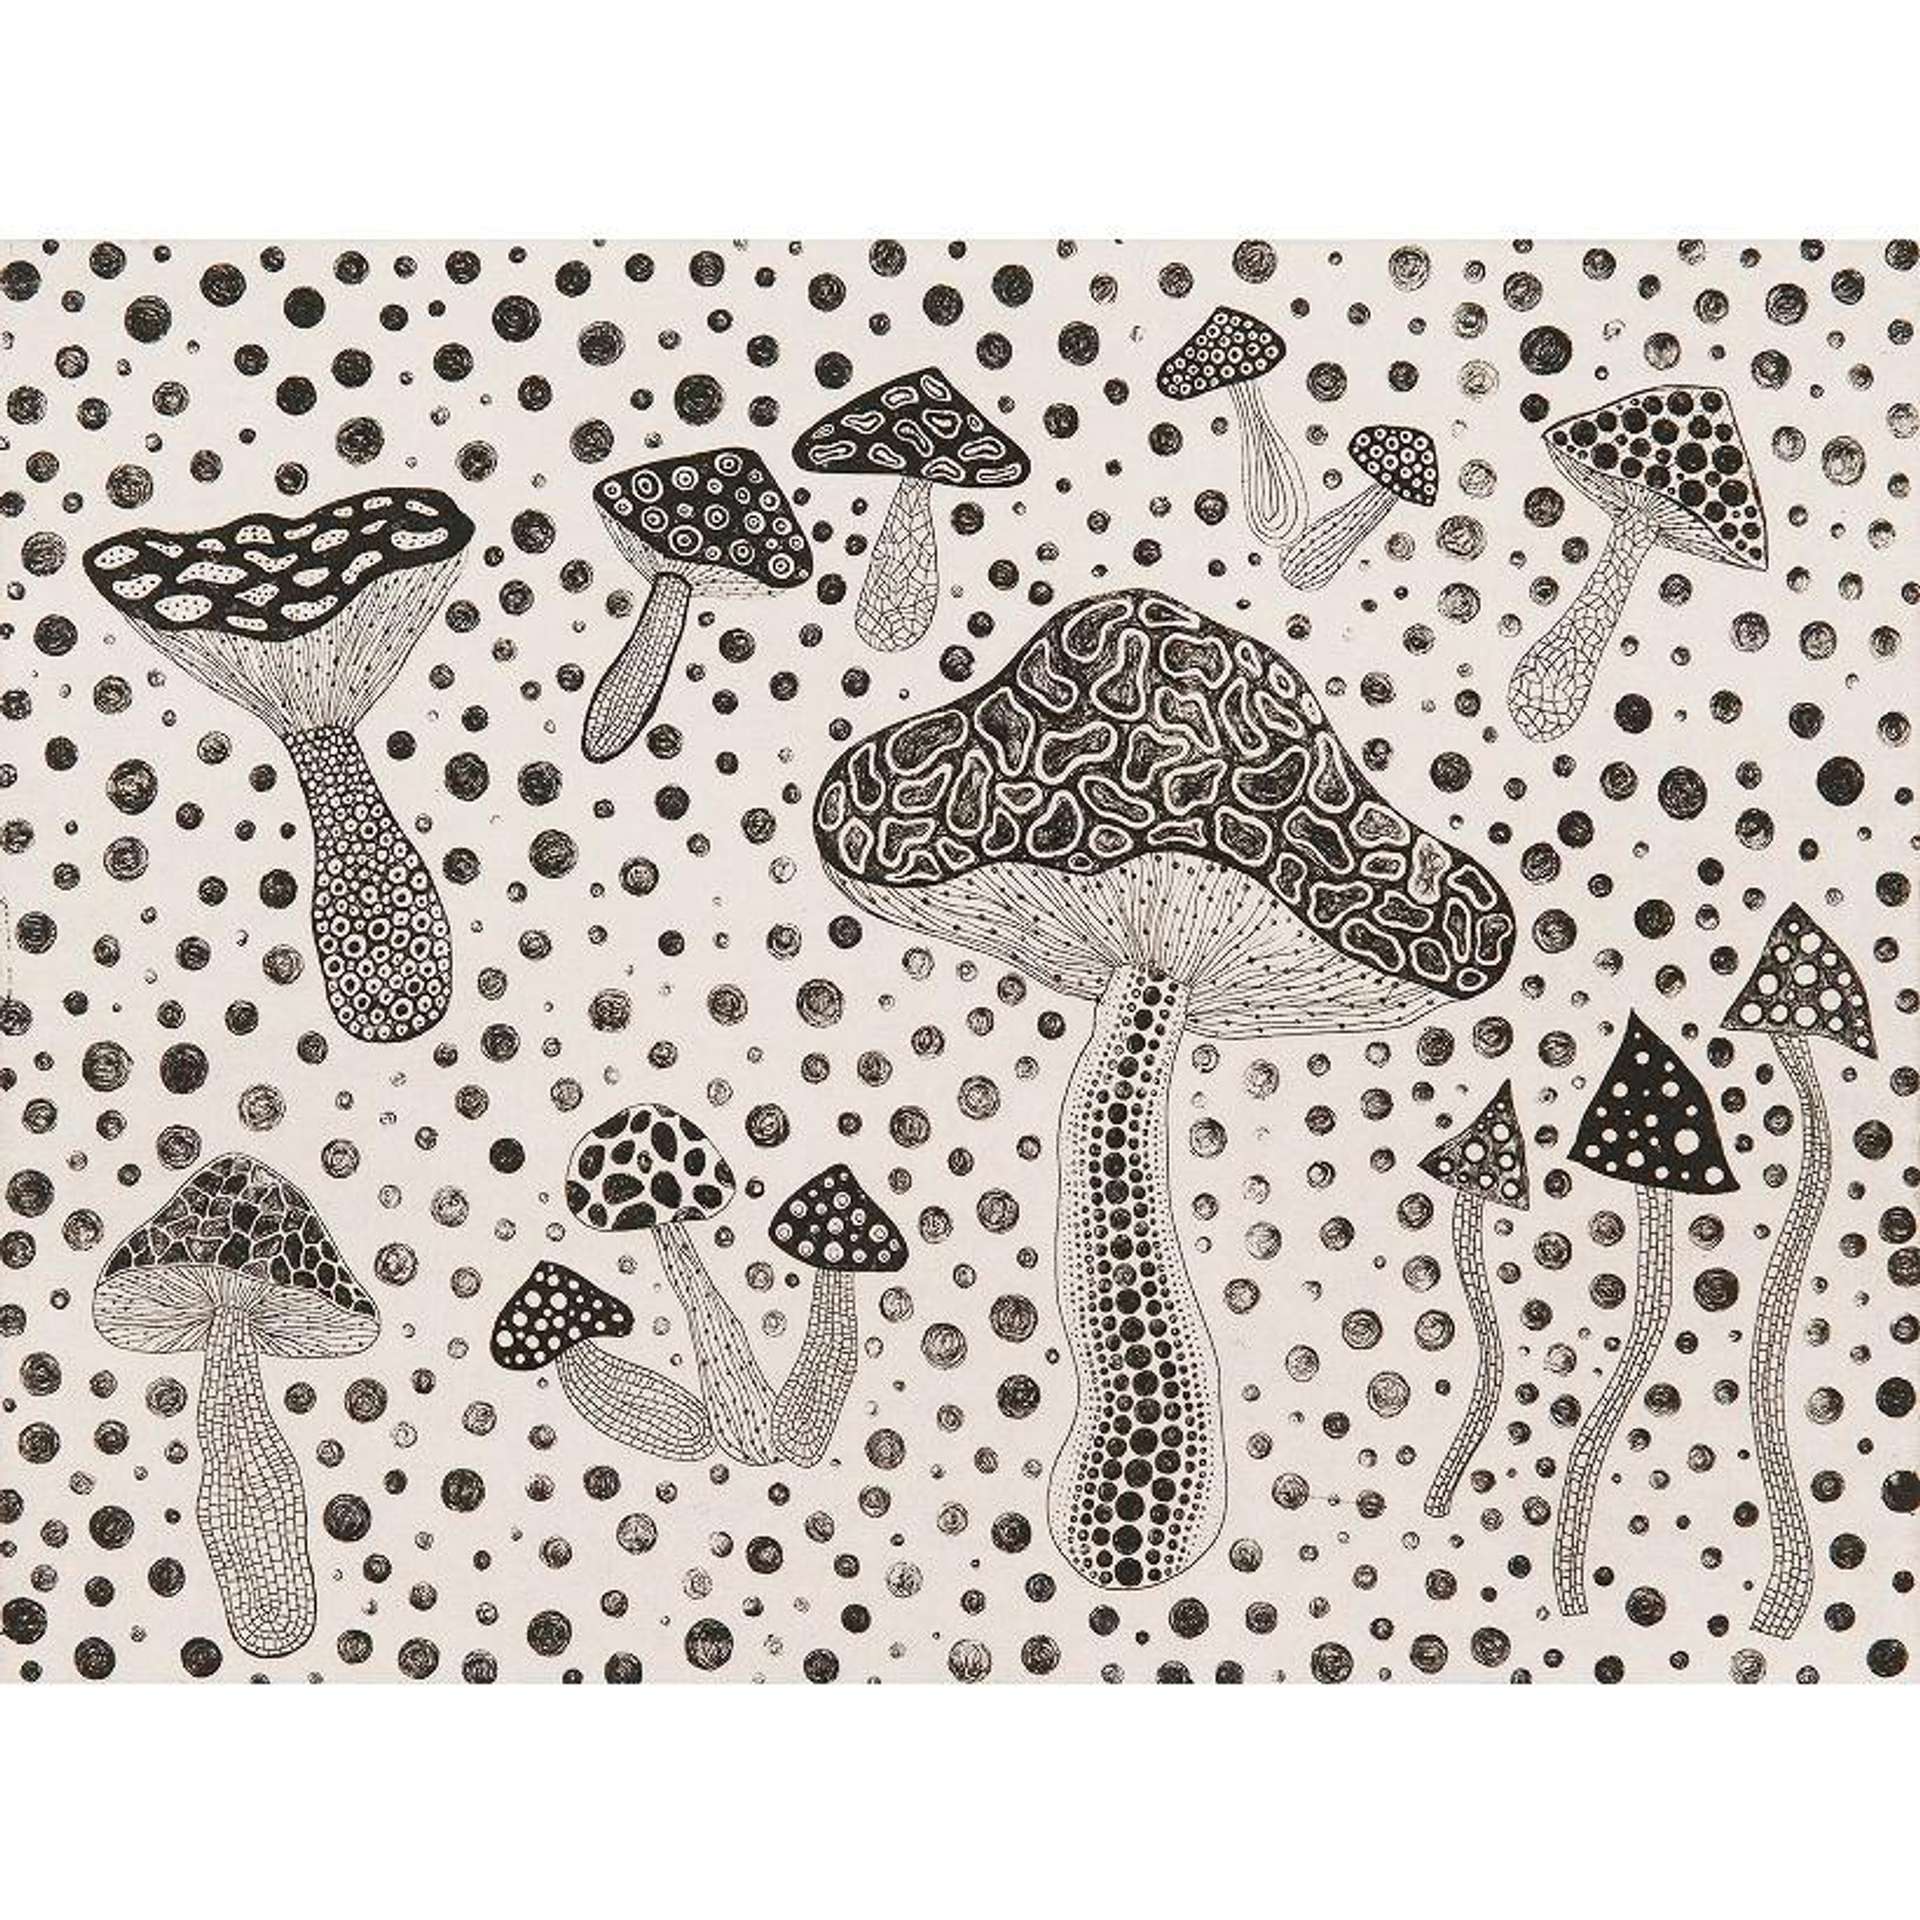 Mushrooms - Signed Print by Yayoi Kusama 1995 - MyArtBroker